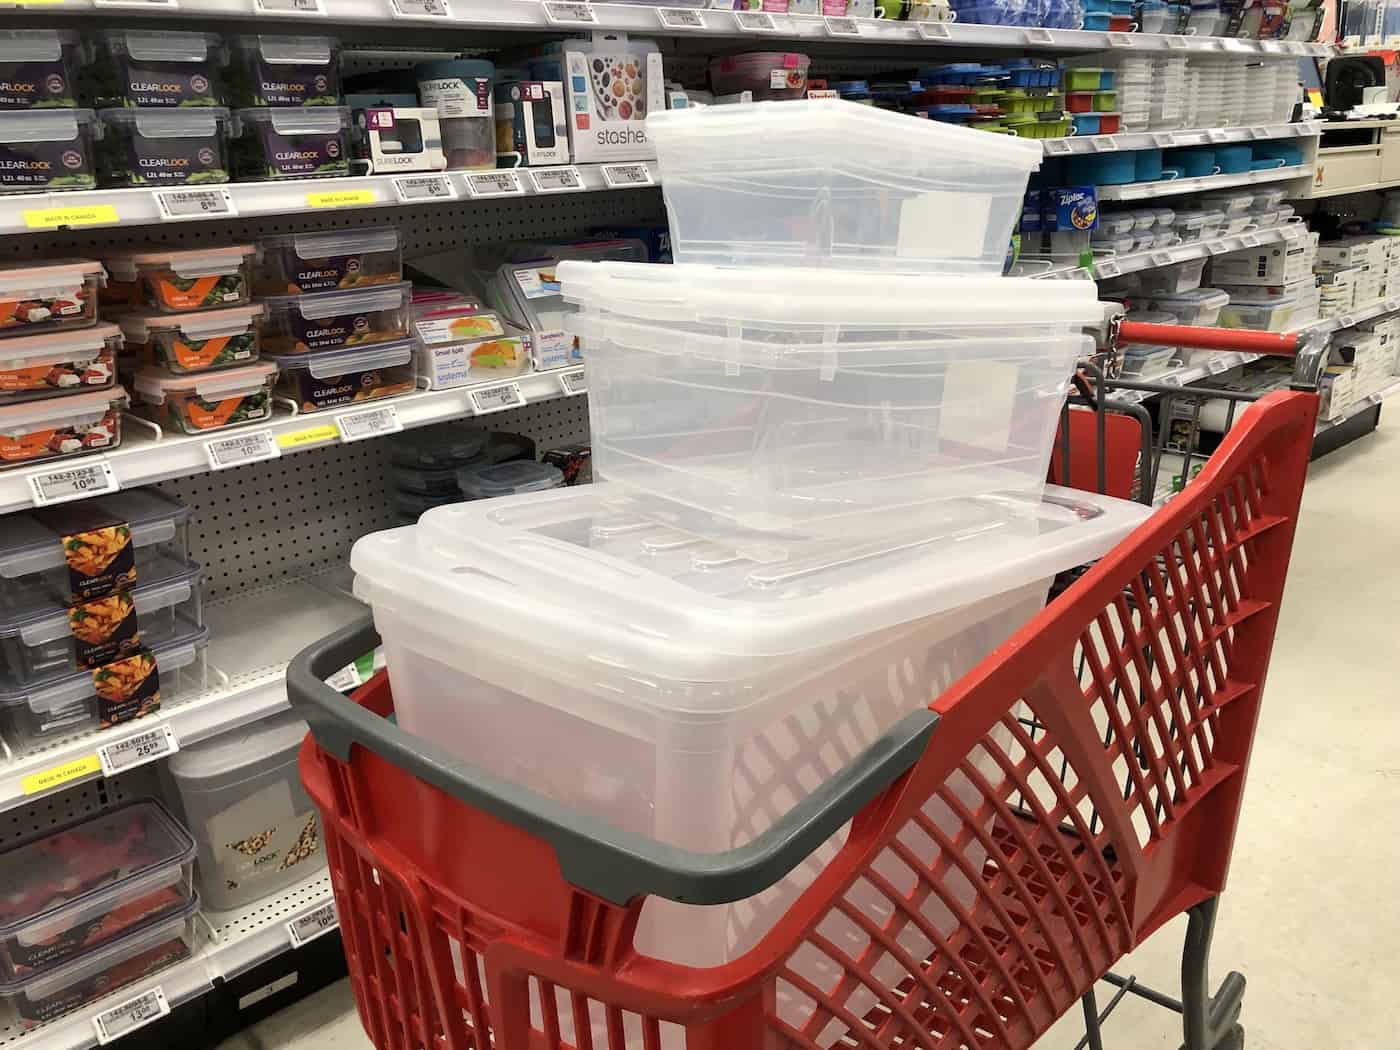 Buying plastic bins for playroom storage